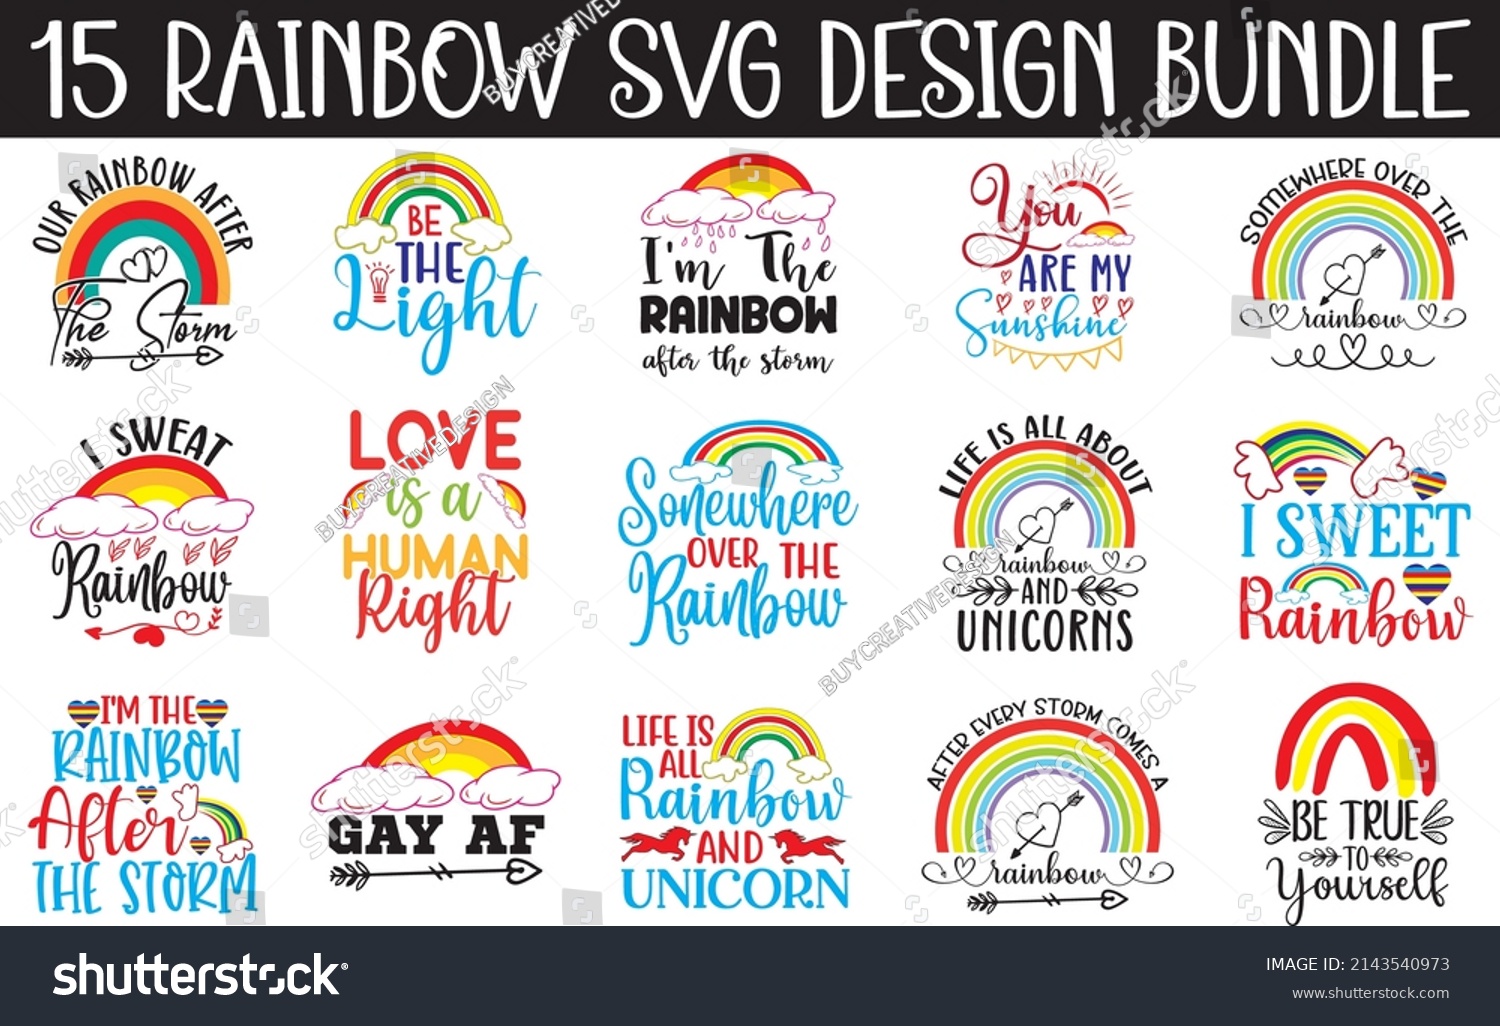 SVG of 15 rainbow svg design bundle svg